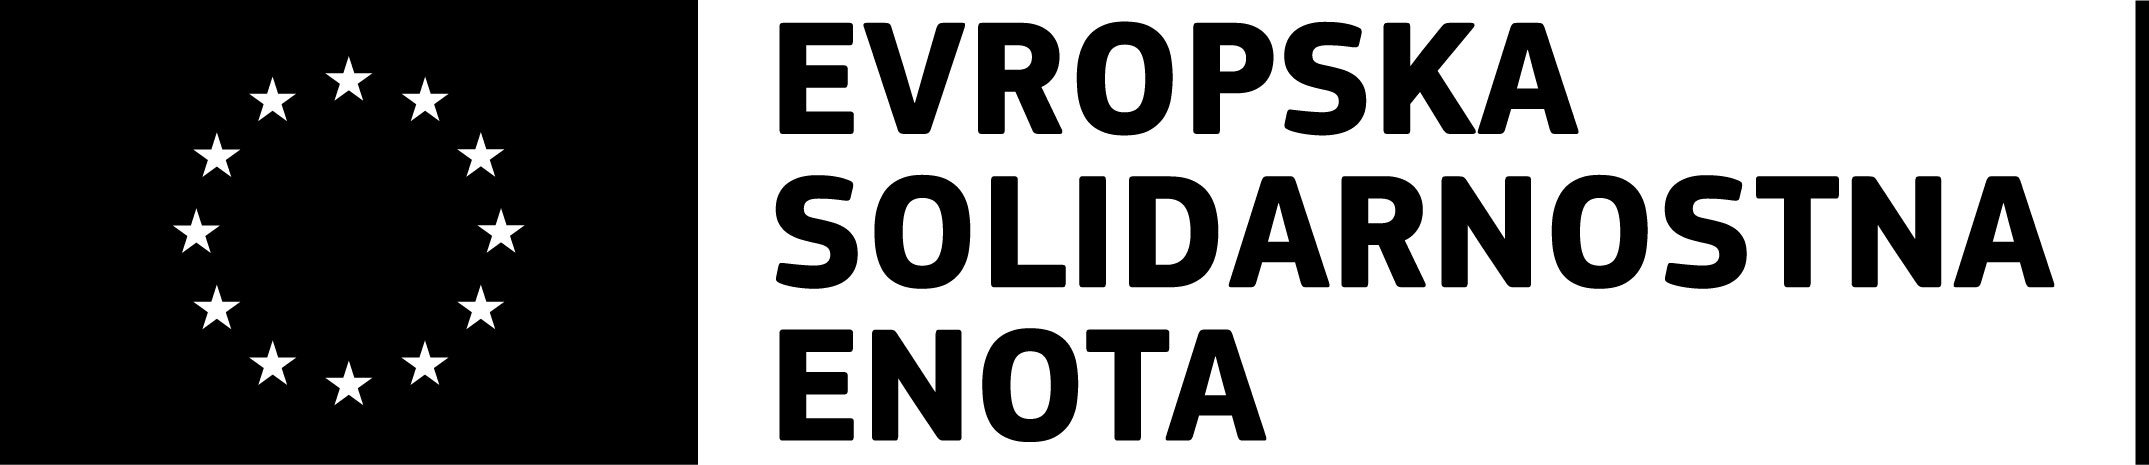 SL_european_solidarity_corps_LOGO_BLACK.jpg